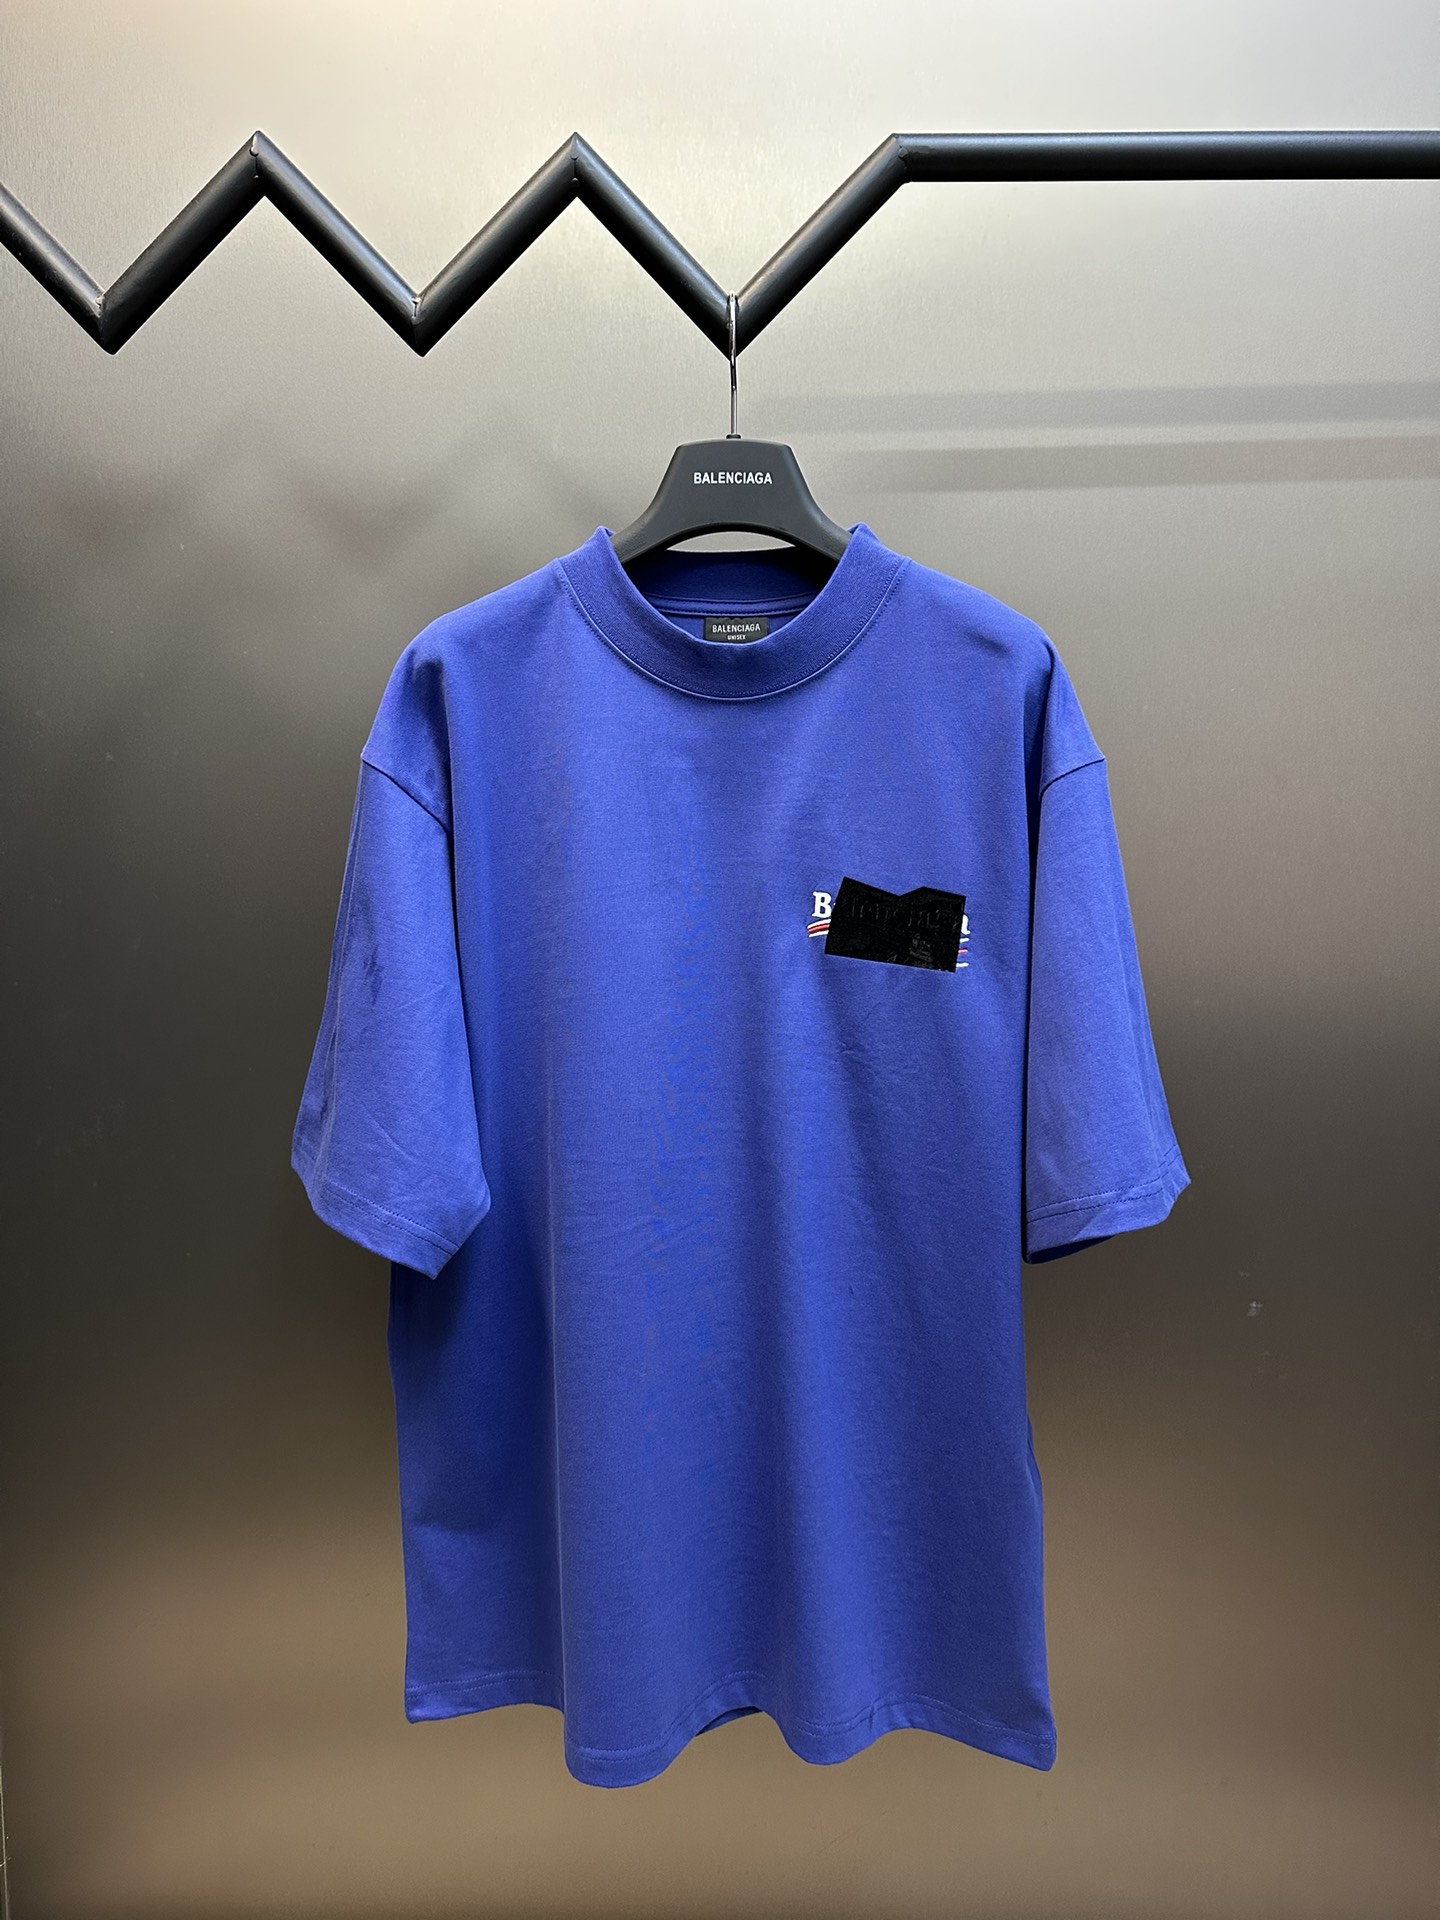 Balenciaga Clothing T-Shirt Blue Purple Printing Cotton Fashion Short Sleeve